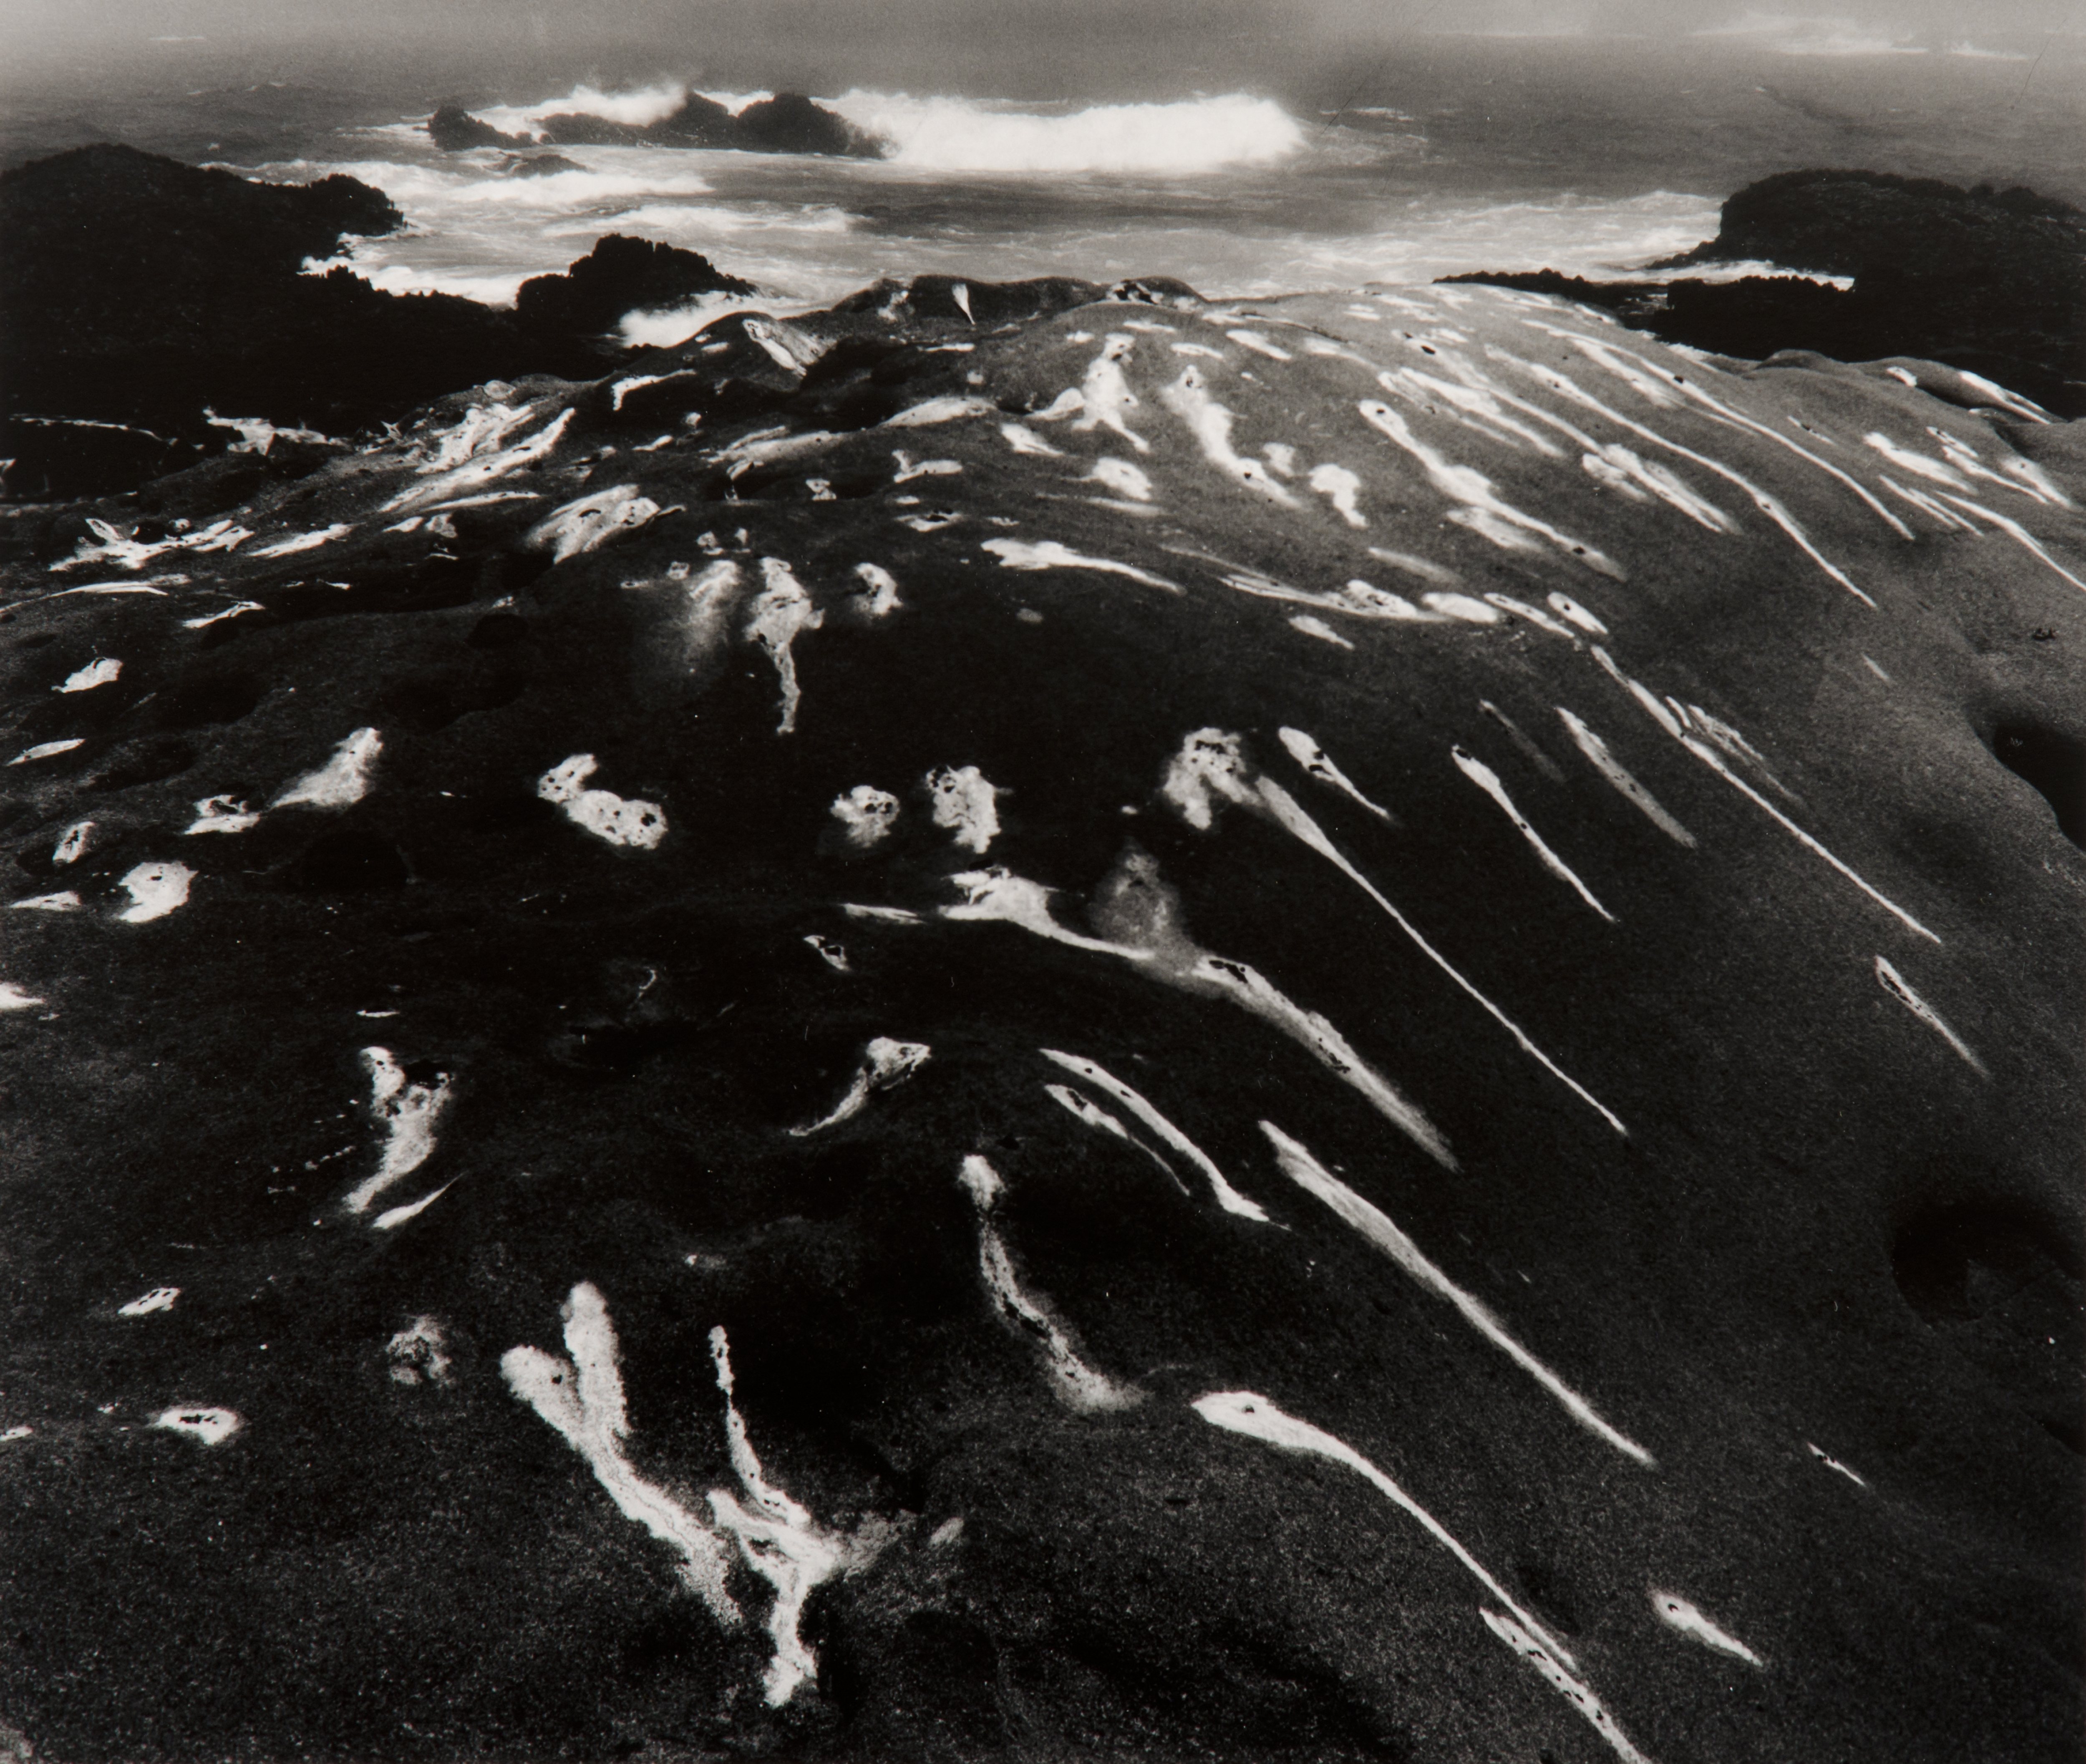 Birdlime and Surf, Point Lobos, California, 1951 from the Jupiter Portfolio